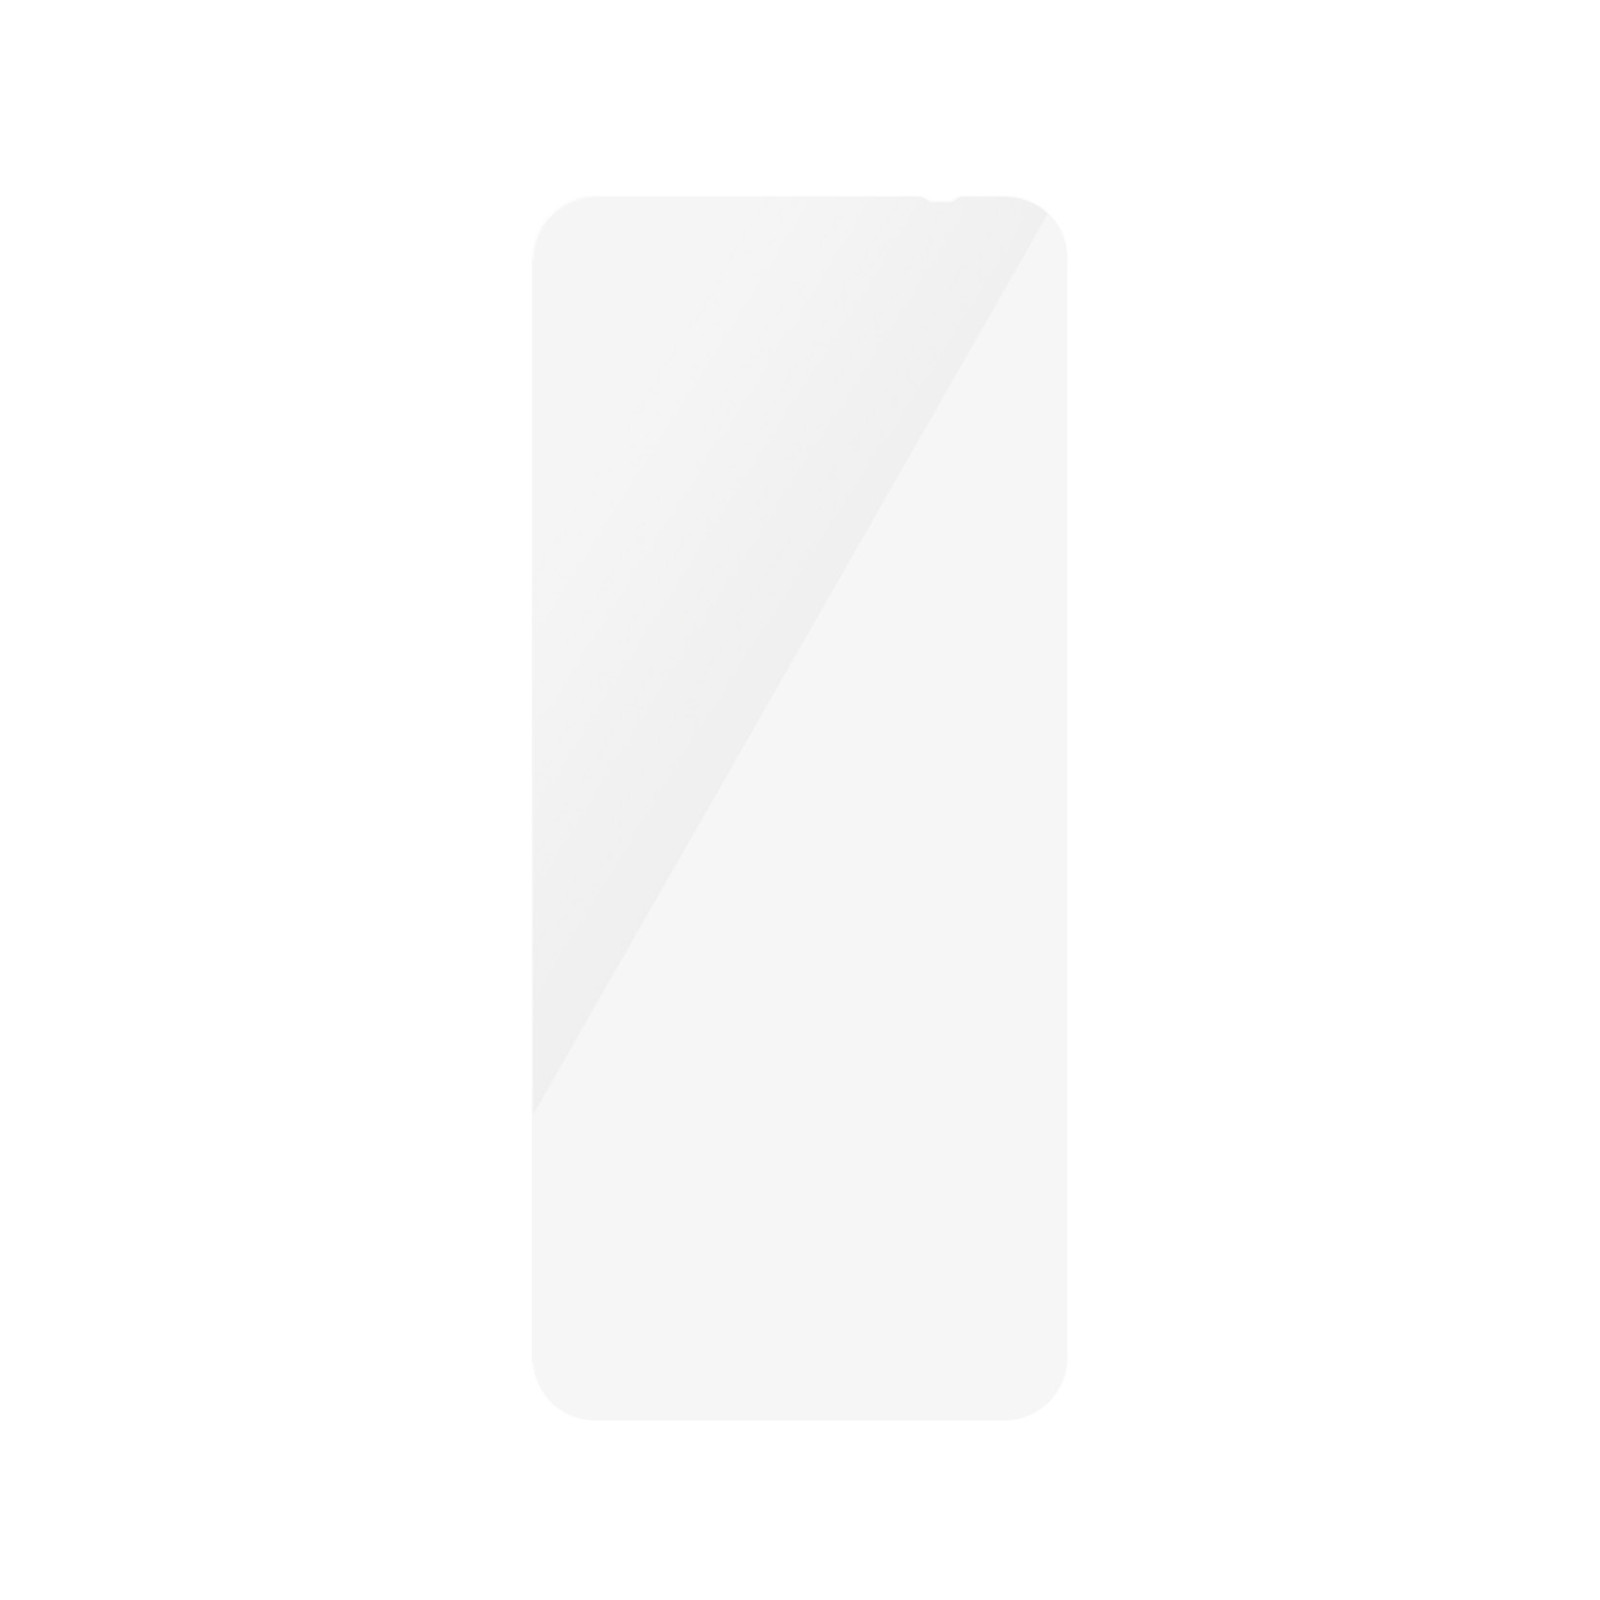 Стъклен протектор PanzerGlass за Xiaomi Redmi 12, 12 5G, Черен